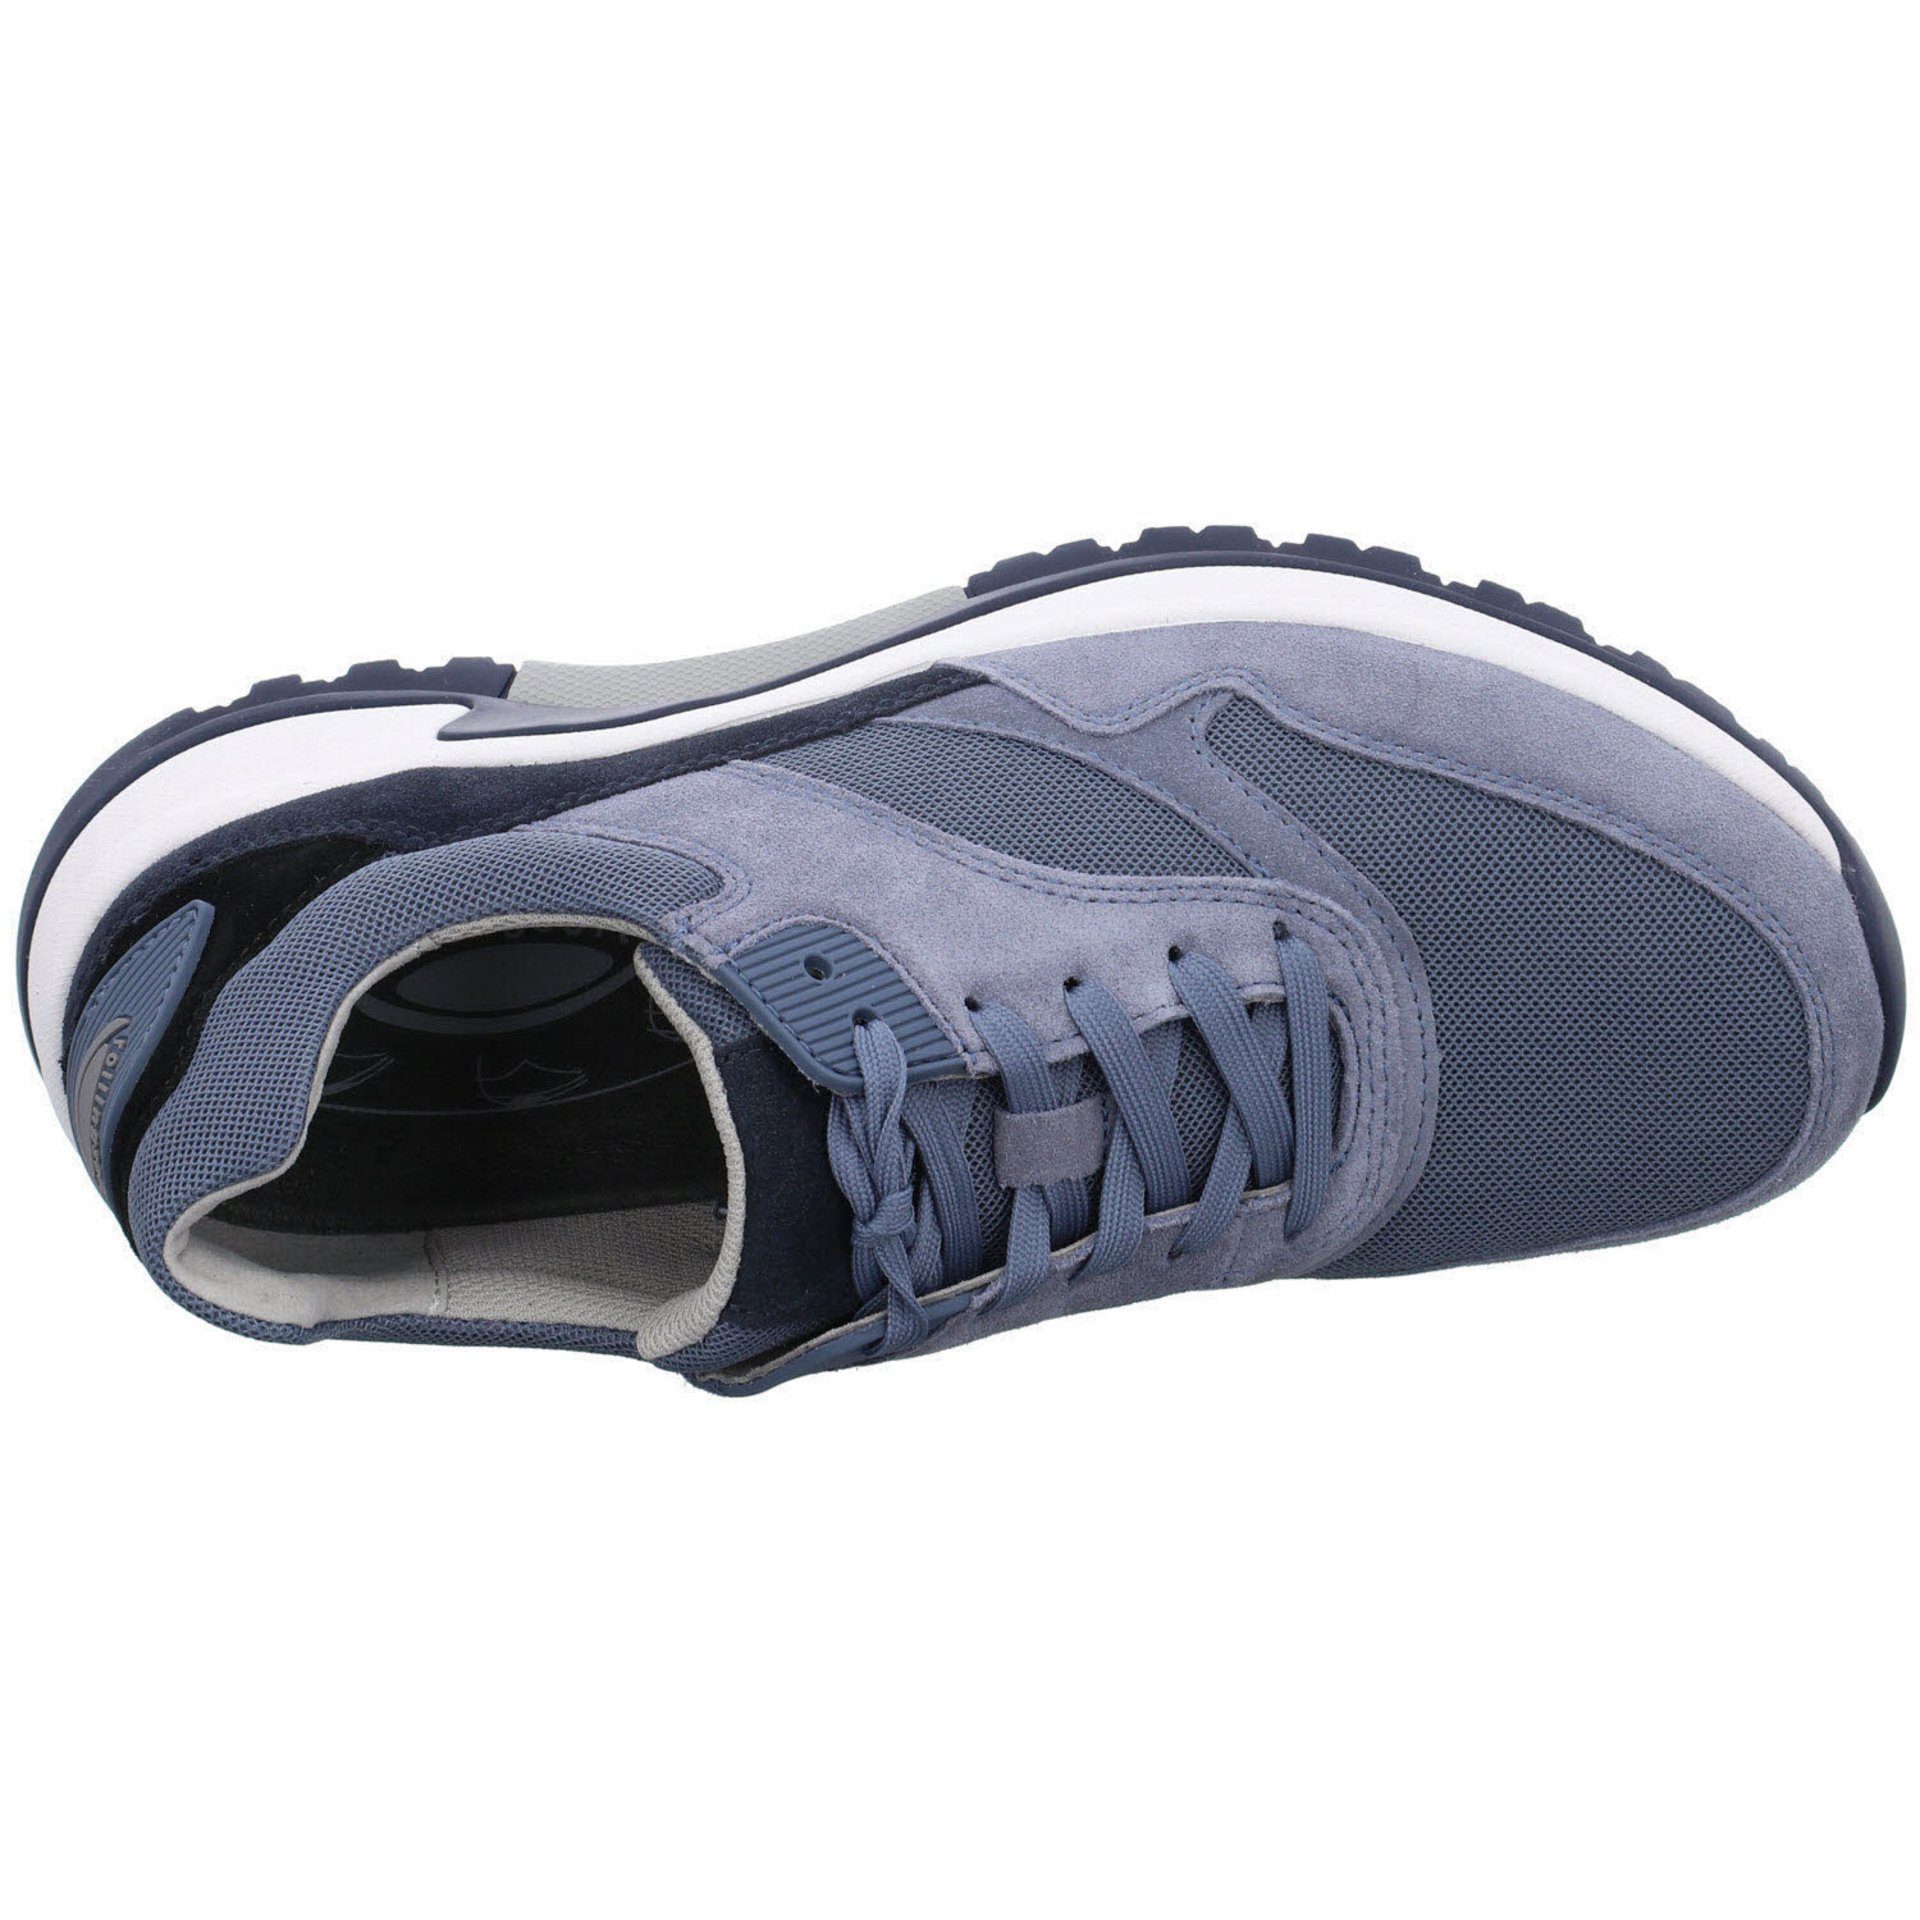 Schuhe Gabor hell Gabor Leder-/Textilkombination Rollingsoft Rollingsoft Schnürschuh blau Sneaker Sneaker Pius Herren